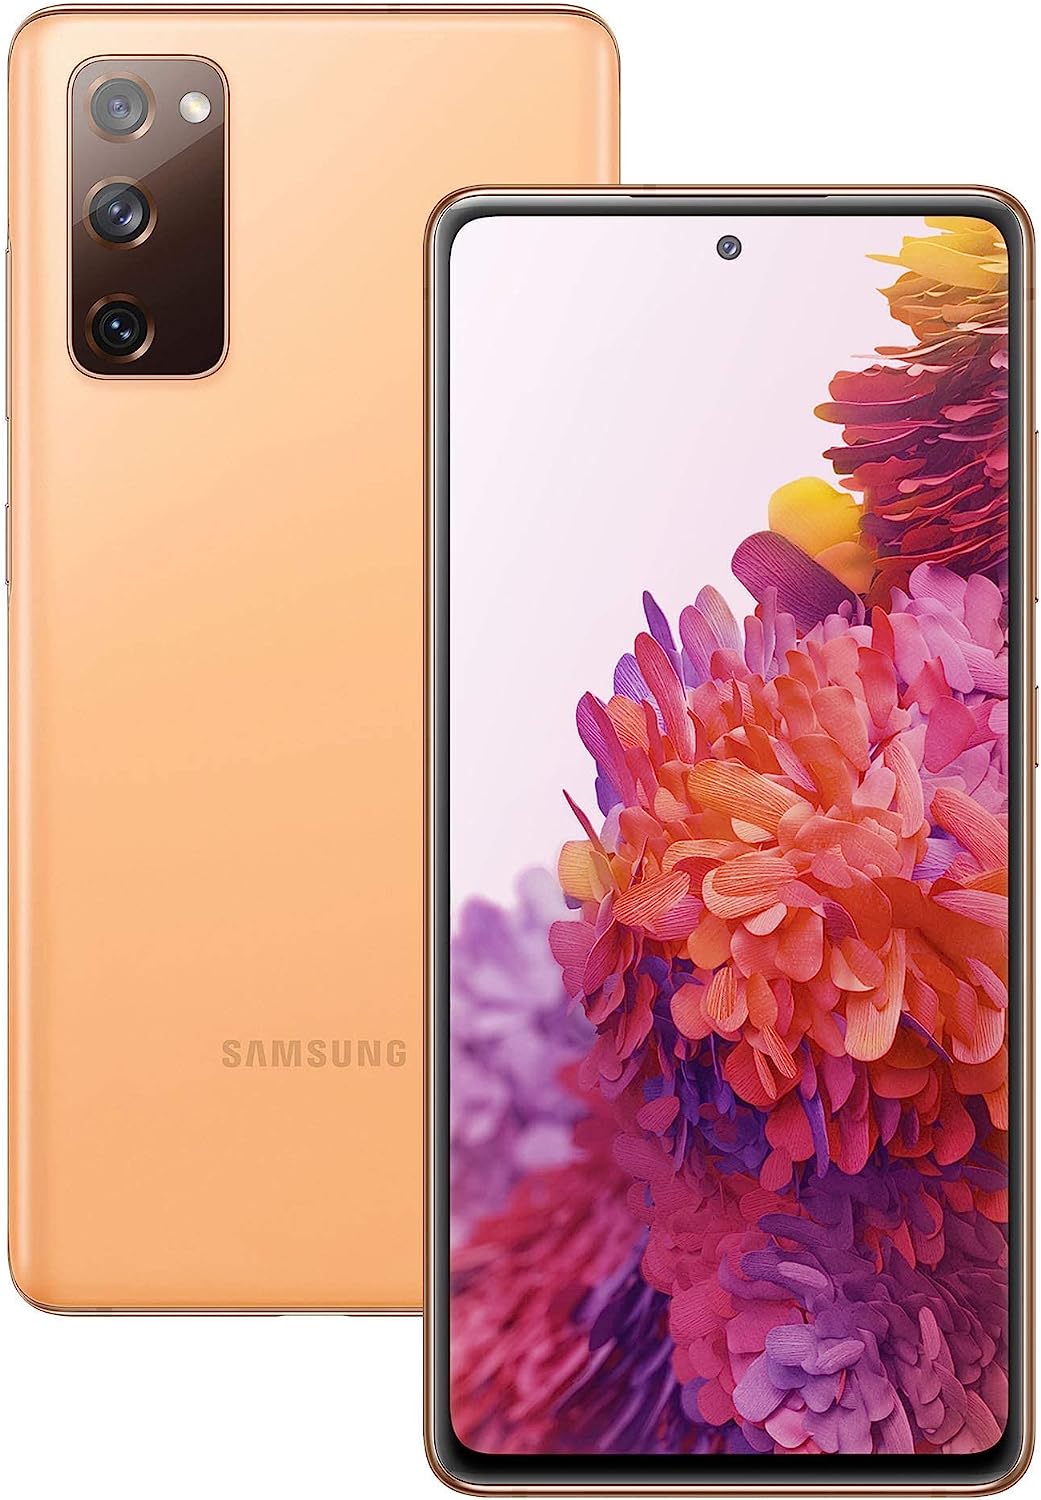 Samsung Galaxy S20 FE 5G 128GB Orange Very Good 128GB Orange Very Good